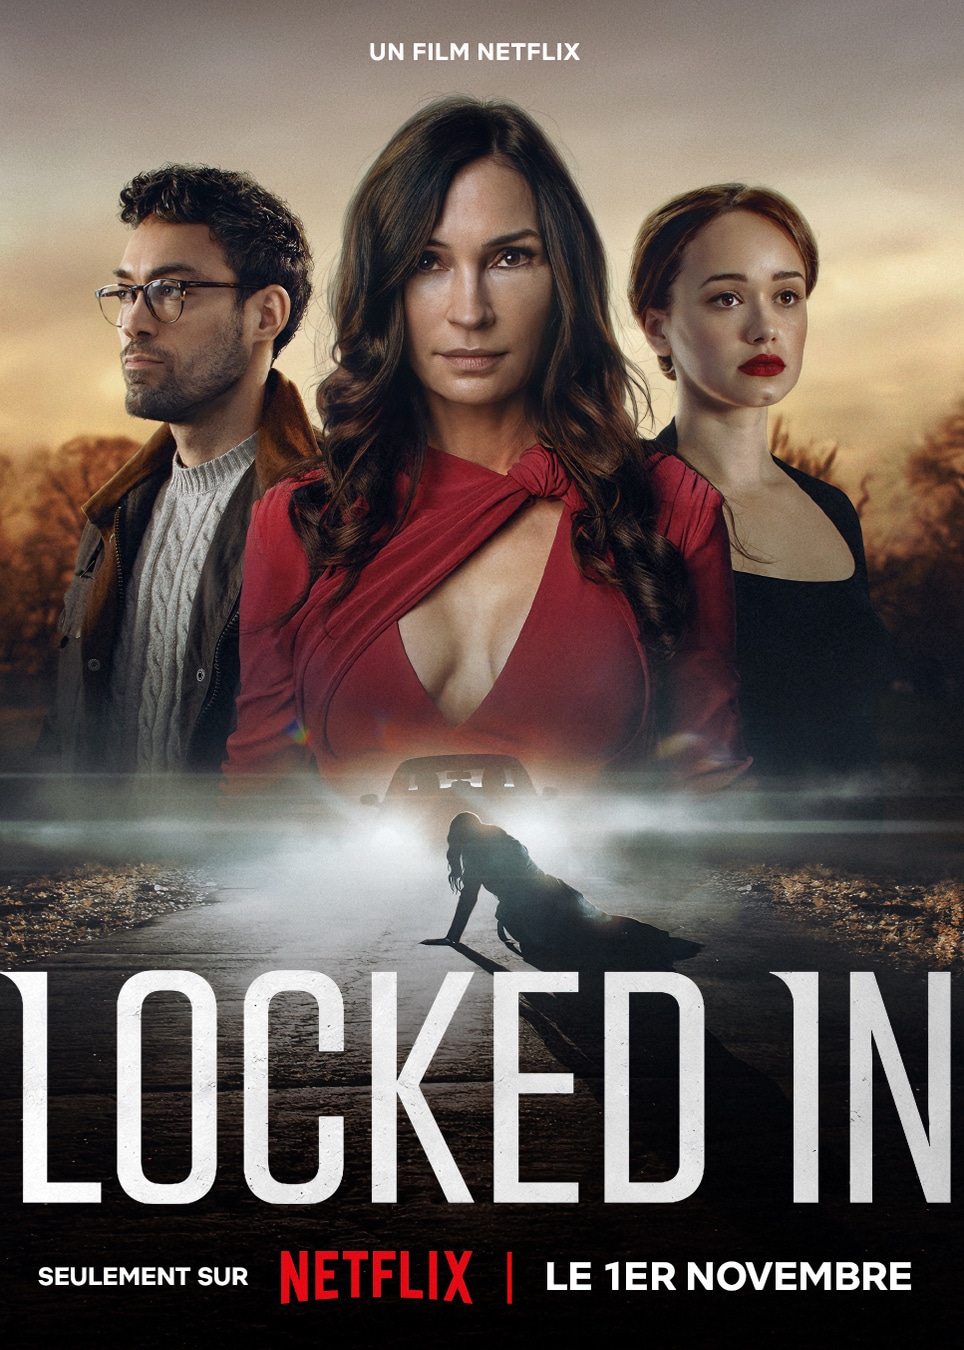 Locked In Movie (2023) Release Date, Review, Cast, Trailer, Watch